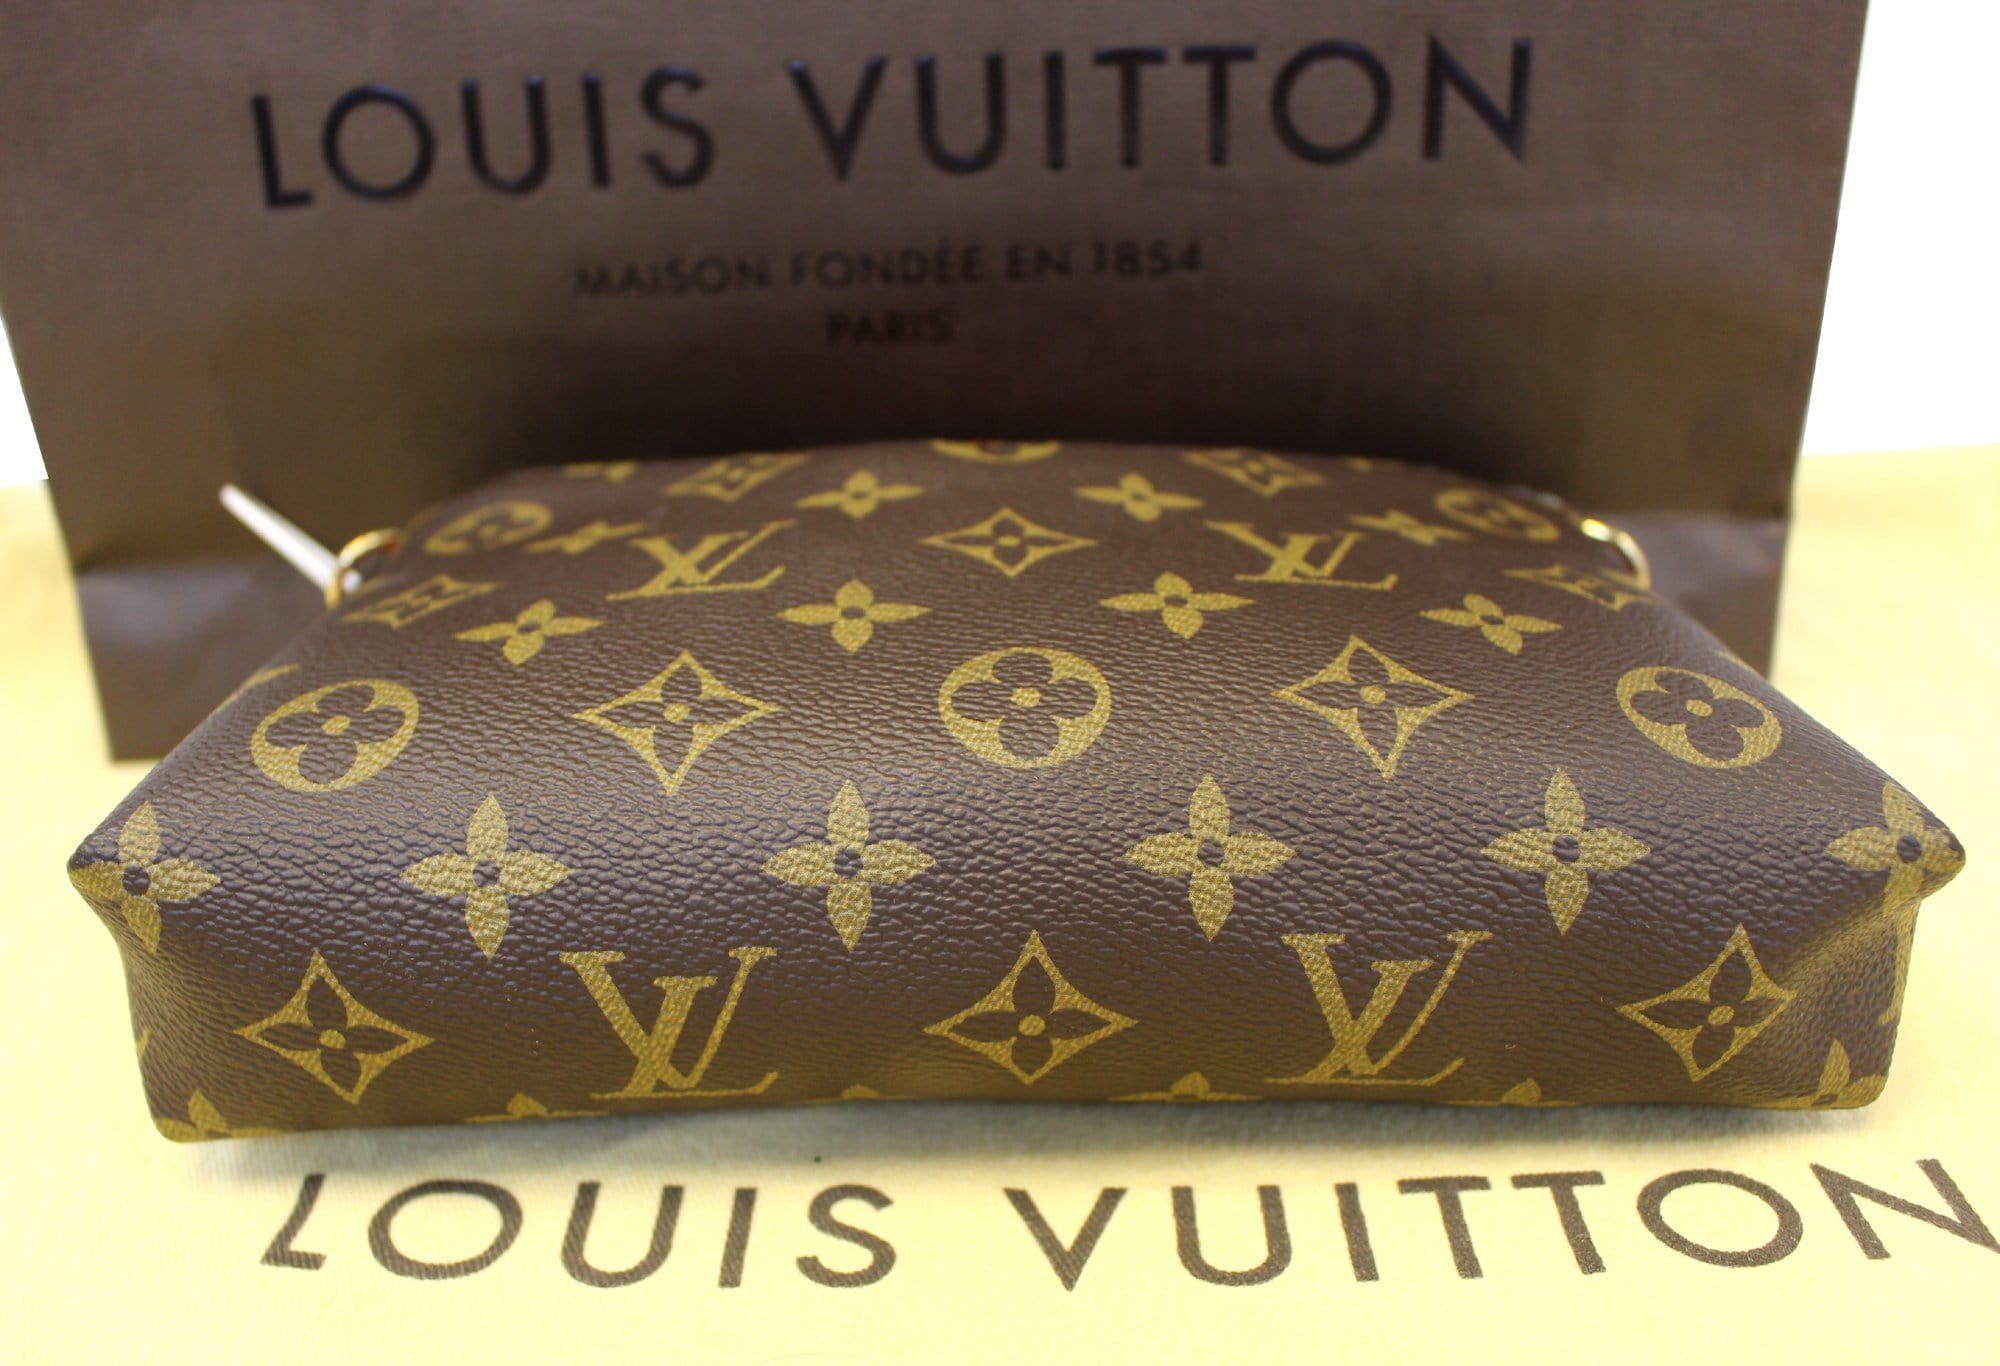 Authentic Vintage Louis Vuitton cosmetic bag - clothing